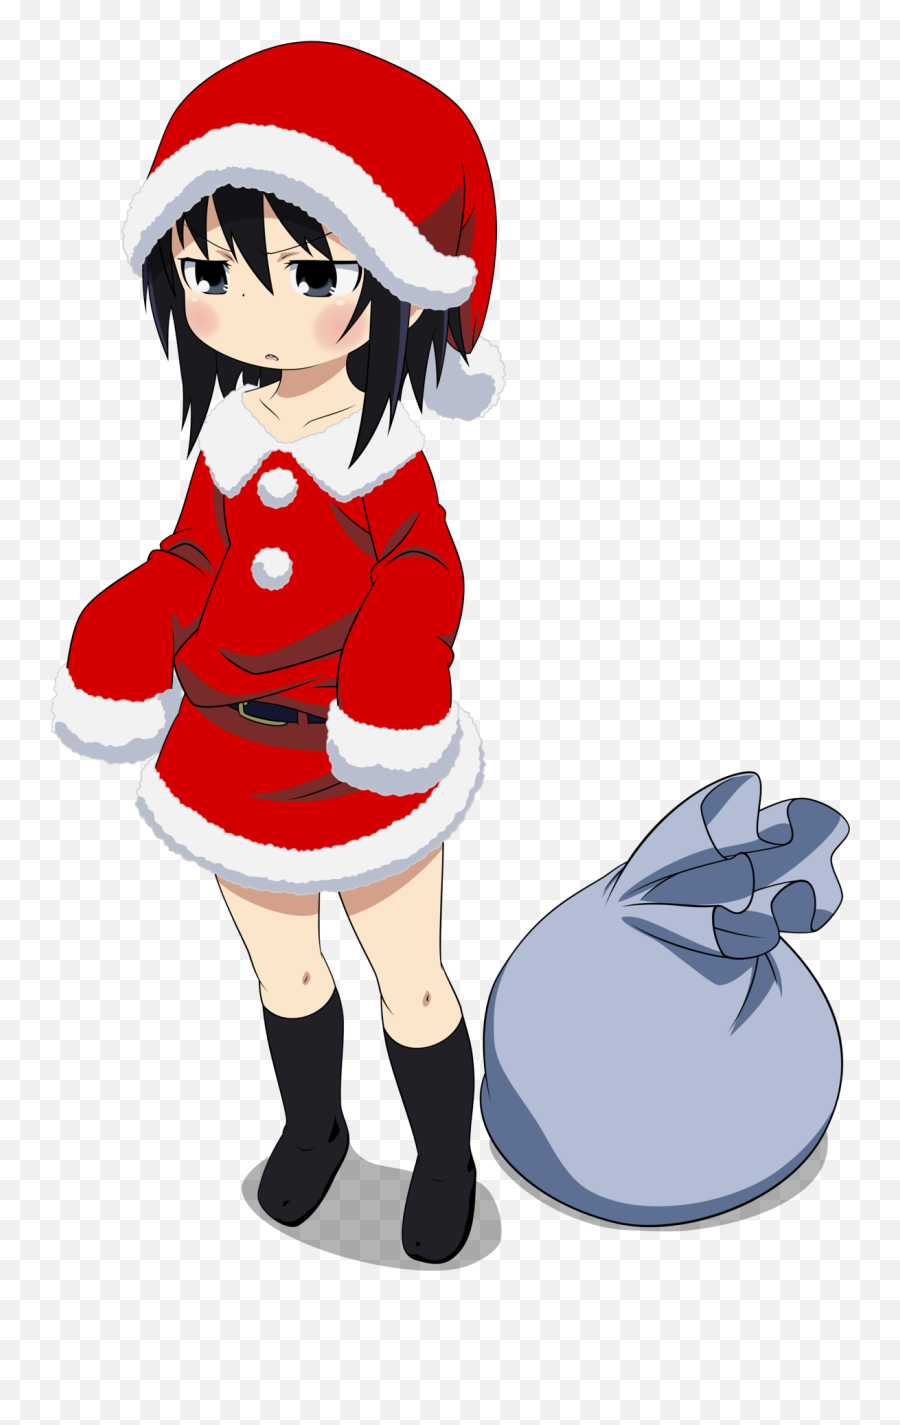 Diabolik Lovers Christmas icon - Anime Photo (36324579) - Fanpop